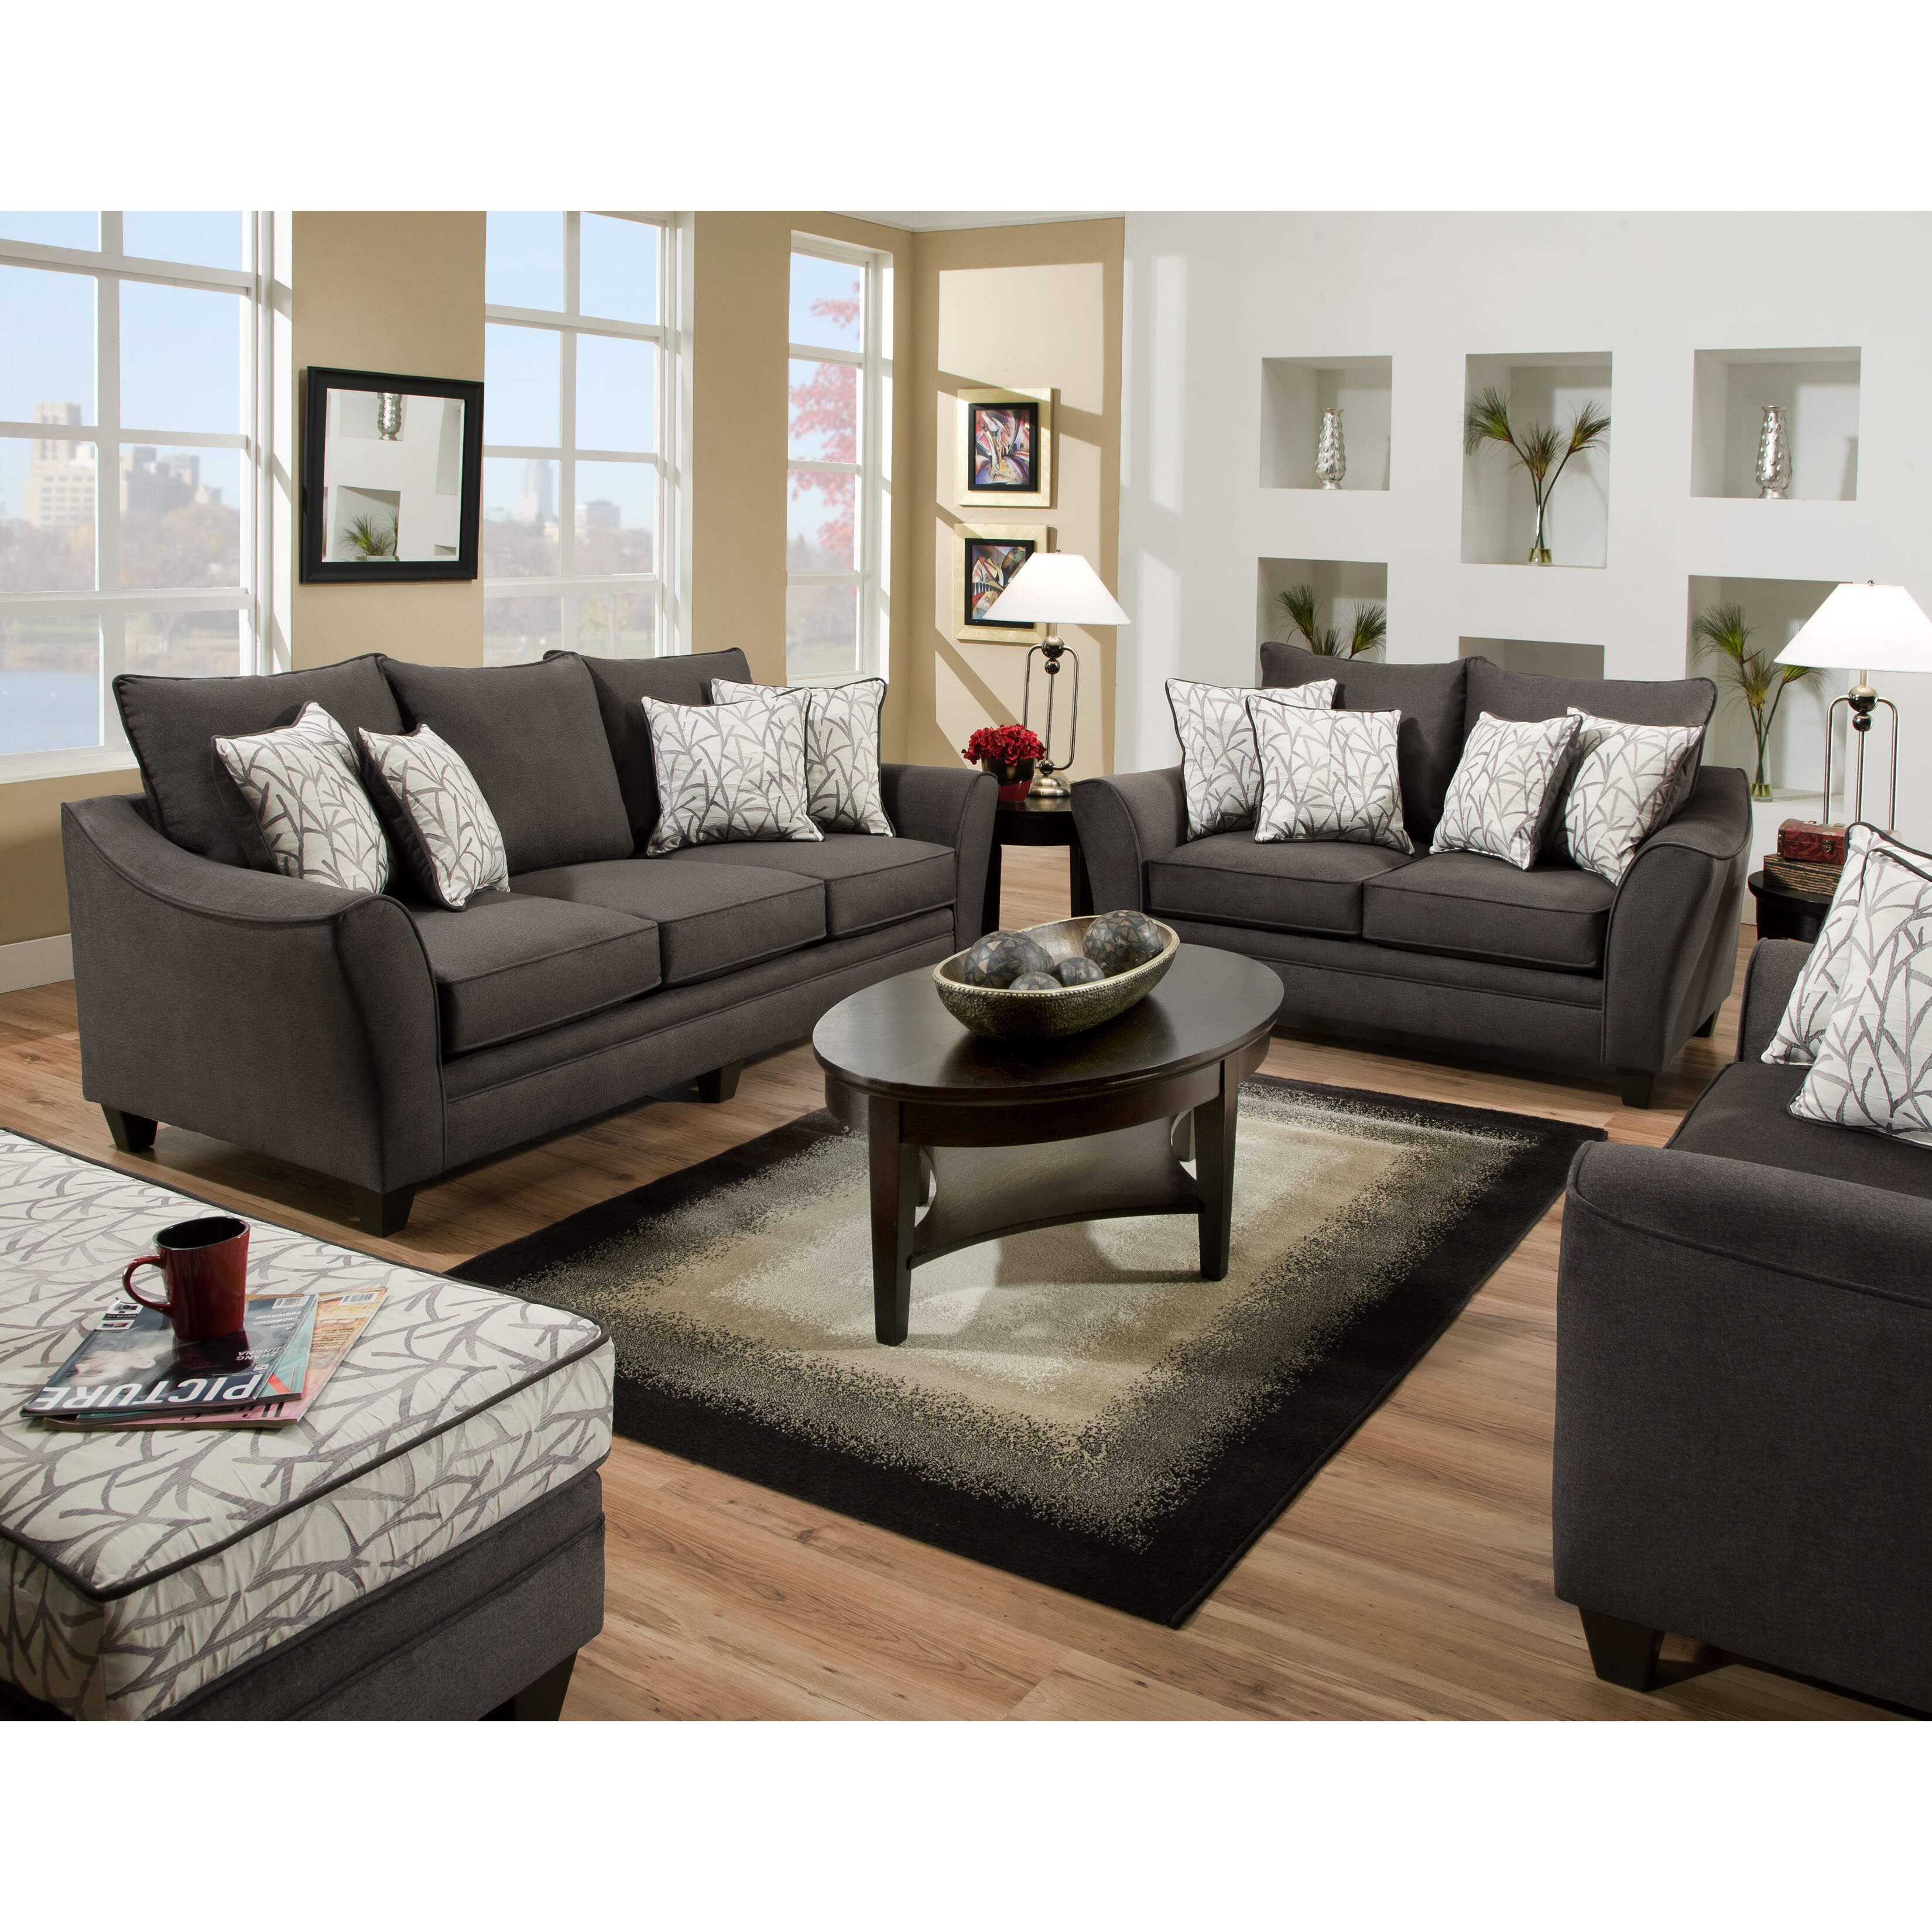 Brady Furniture Industries Bloomingdale Living Room Collection & Reviews | Wayfair